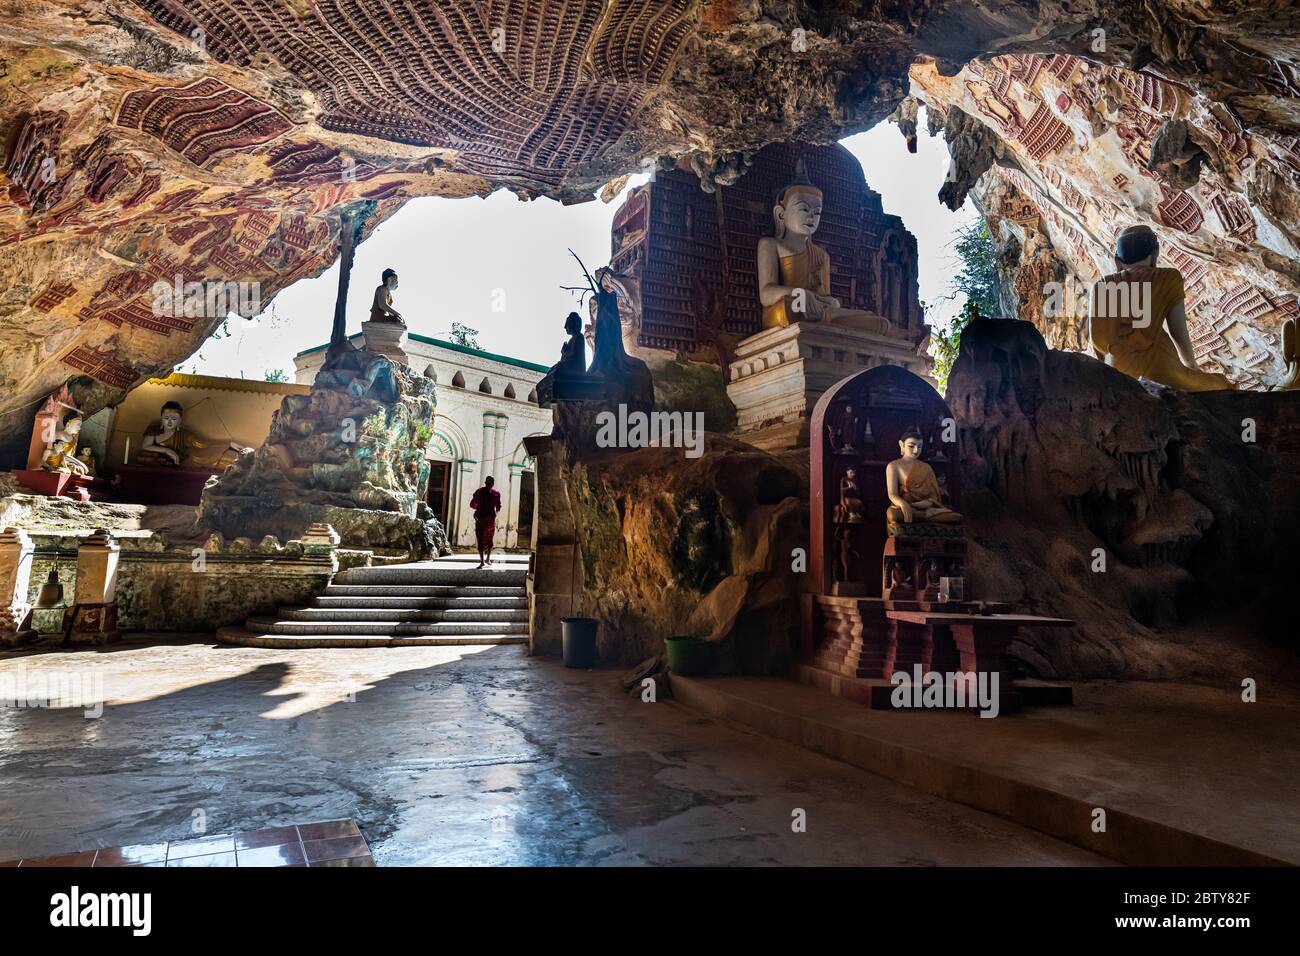 Cave filled with buddhas, Kawgun Cave, Hpa-An, Kayin state, Myanmar (Burma), Asia Stock Photo